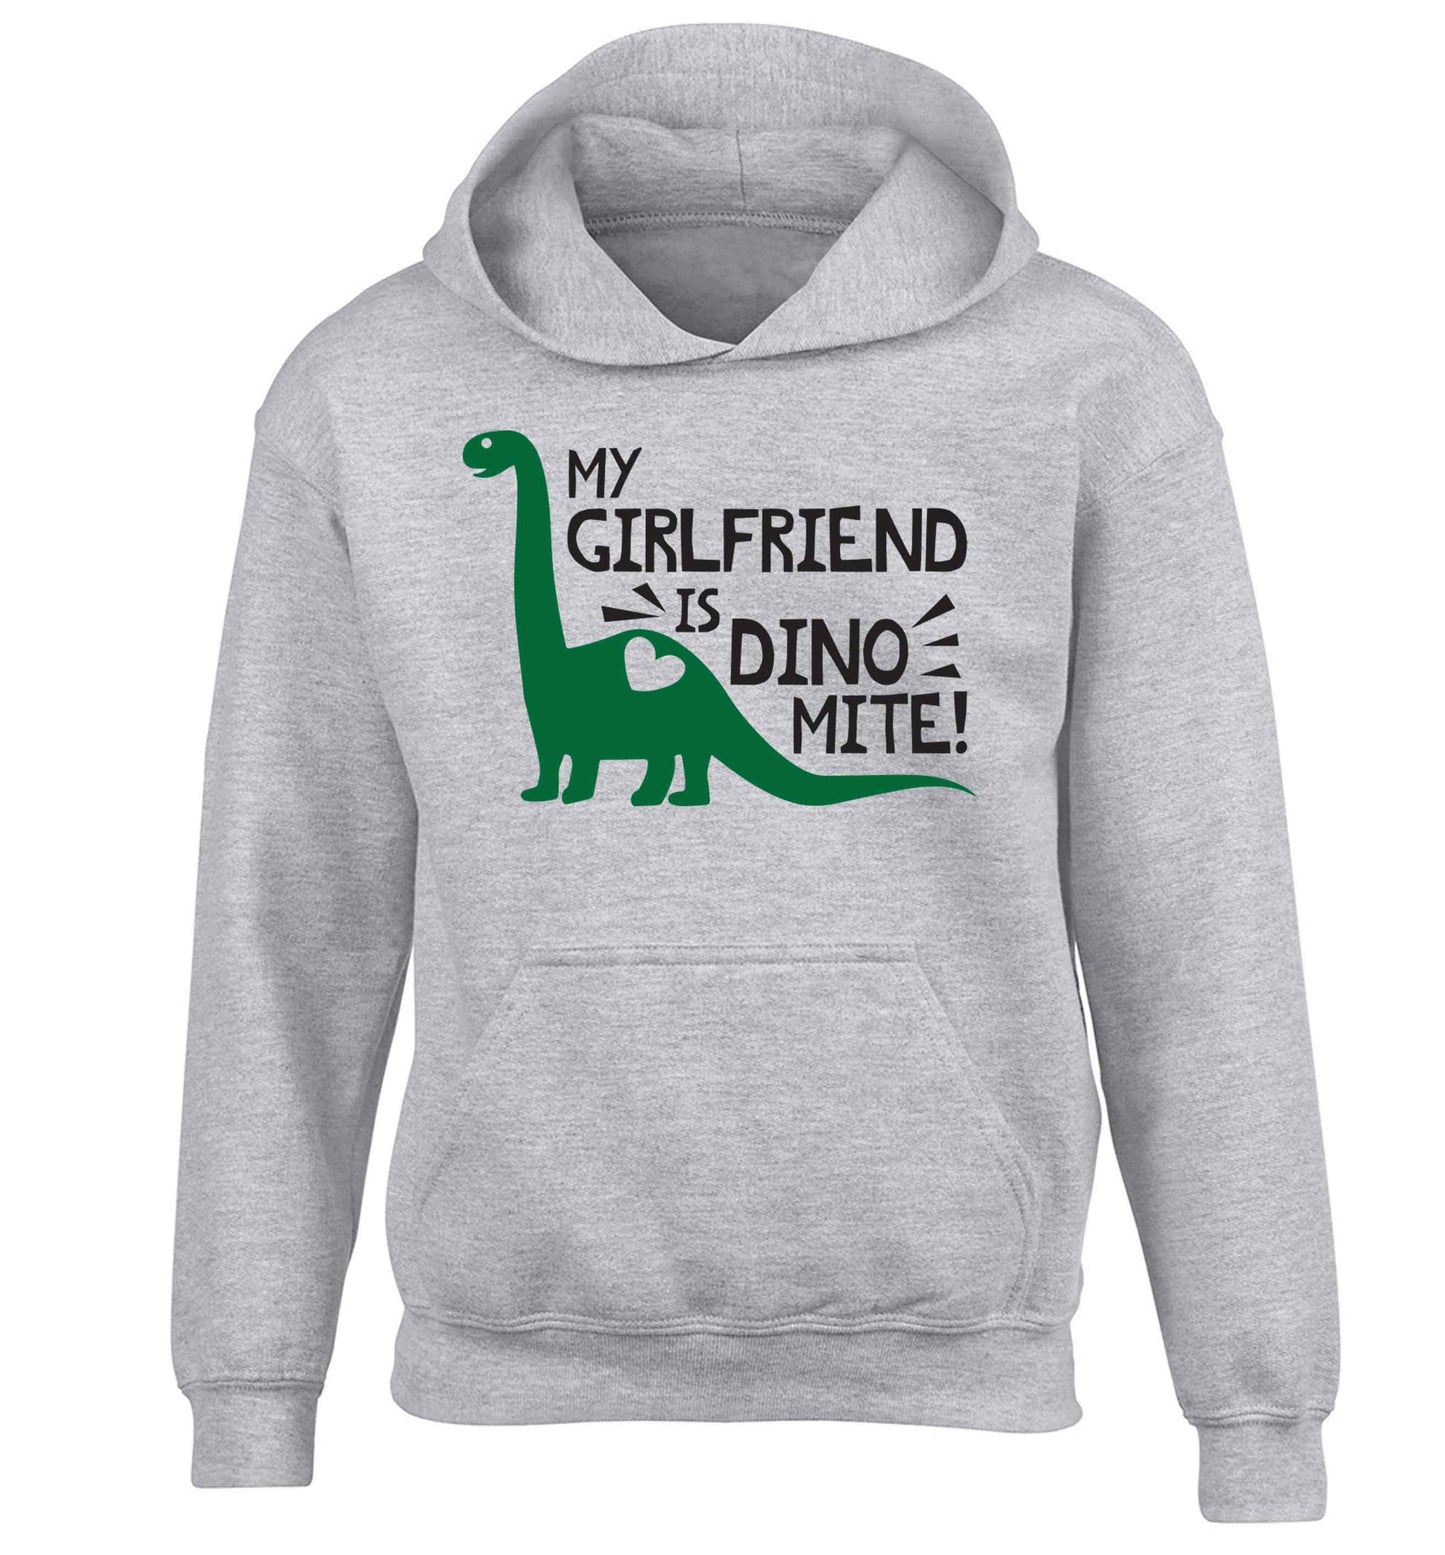 My girlfriend is dinomite! children's grey hoodie 12-13 Years